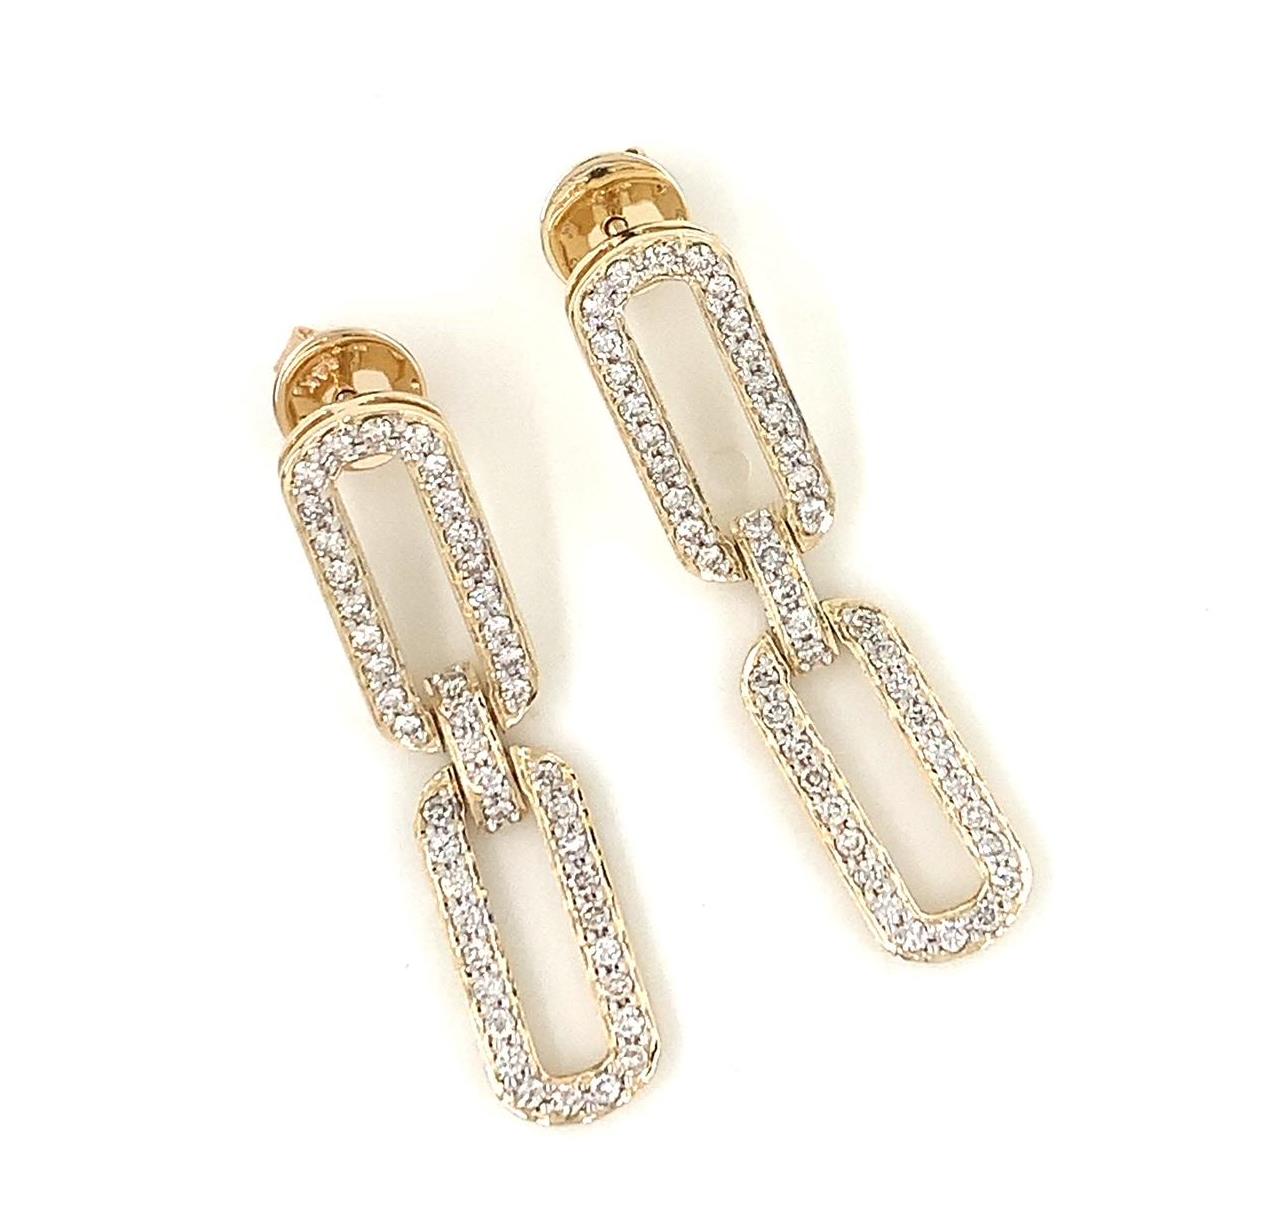 Double pave diamond link earrings